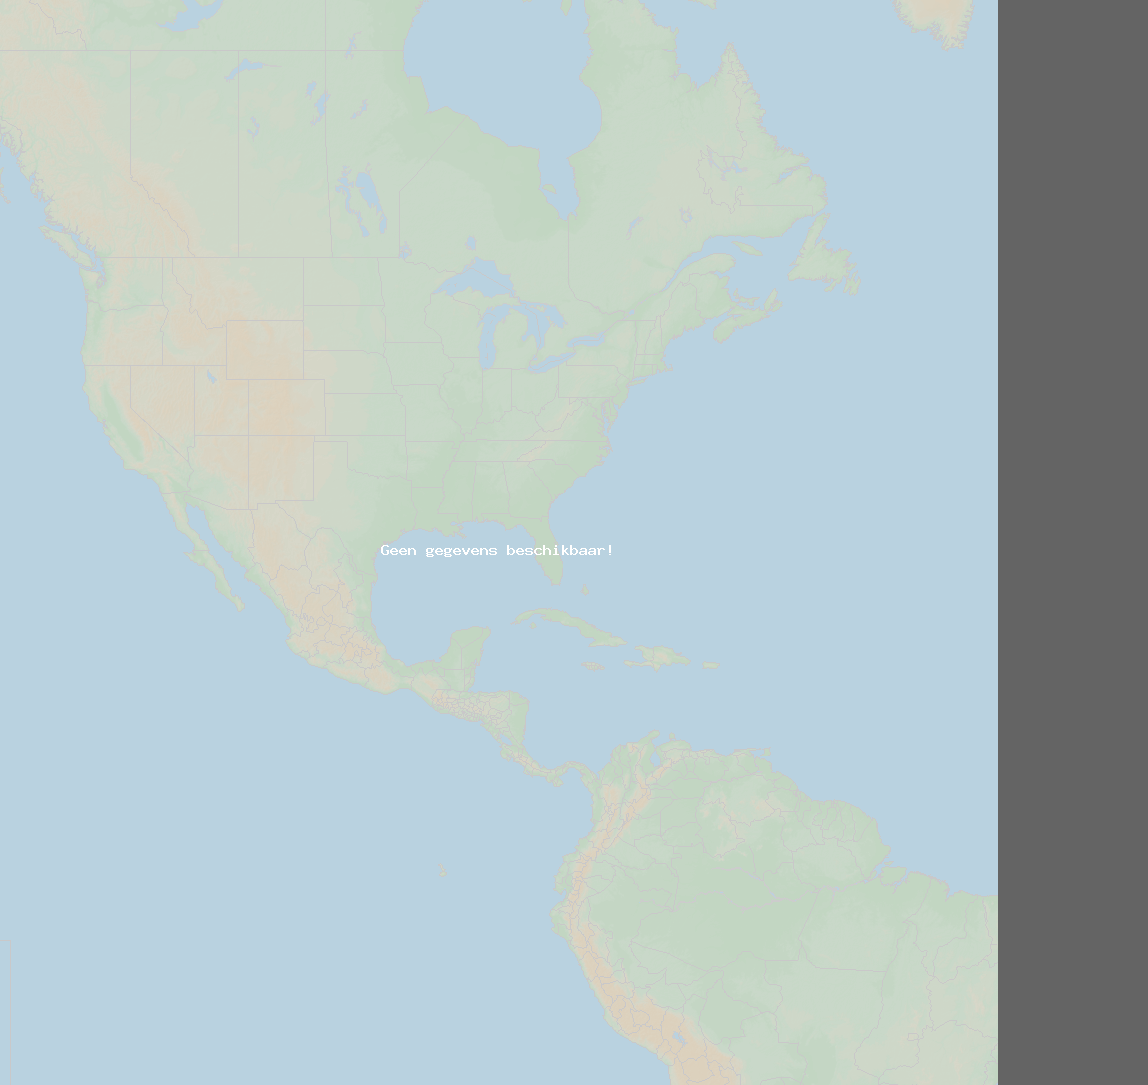 Inslagverhouding (Station Rockford (1737B)) North America 2024 